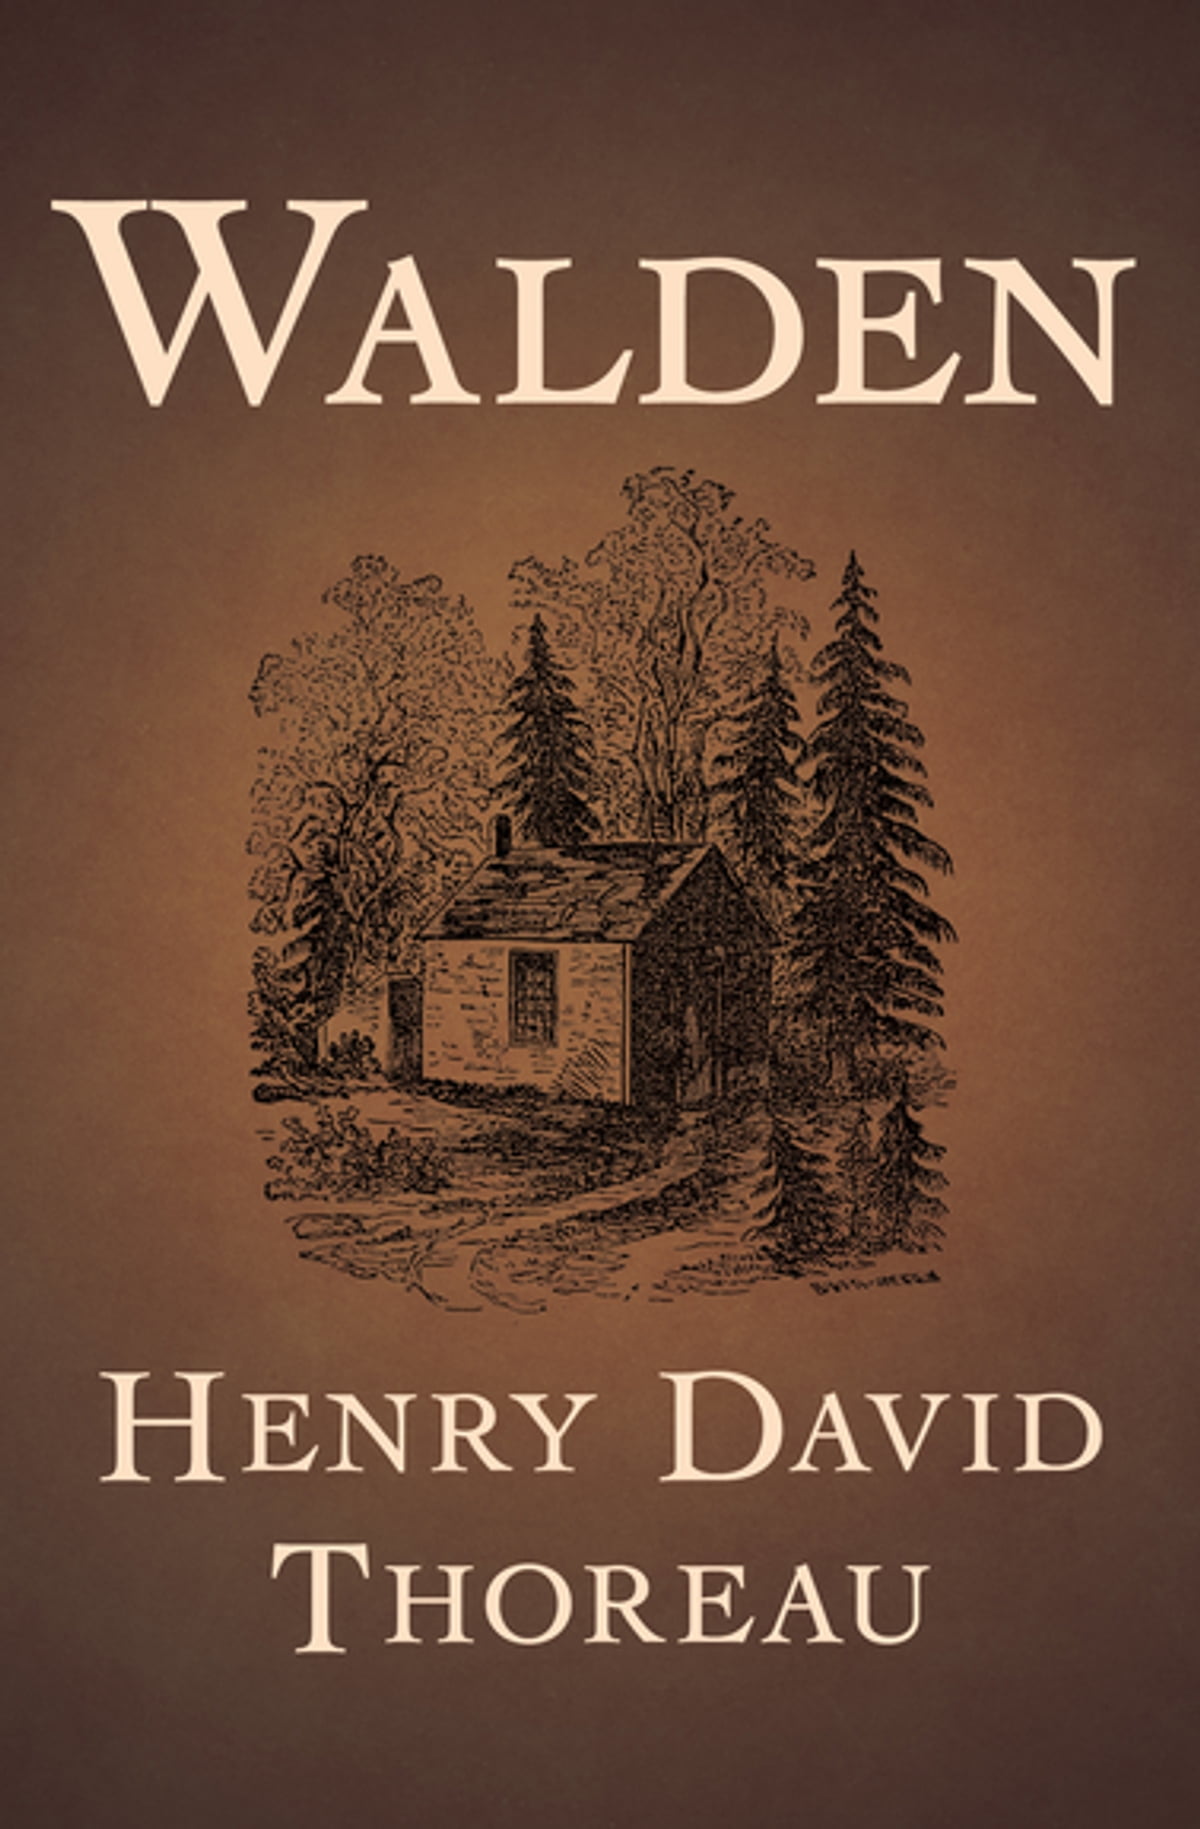 J. Lyndon Shanley, John Updike, Henry David Thoreau: Walden (2016, Princeton University Press)